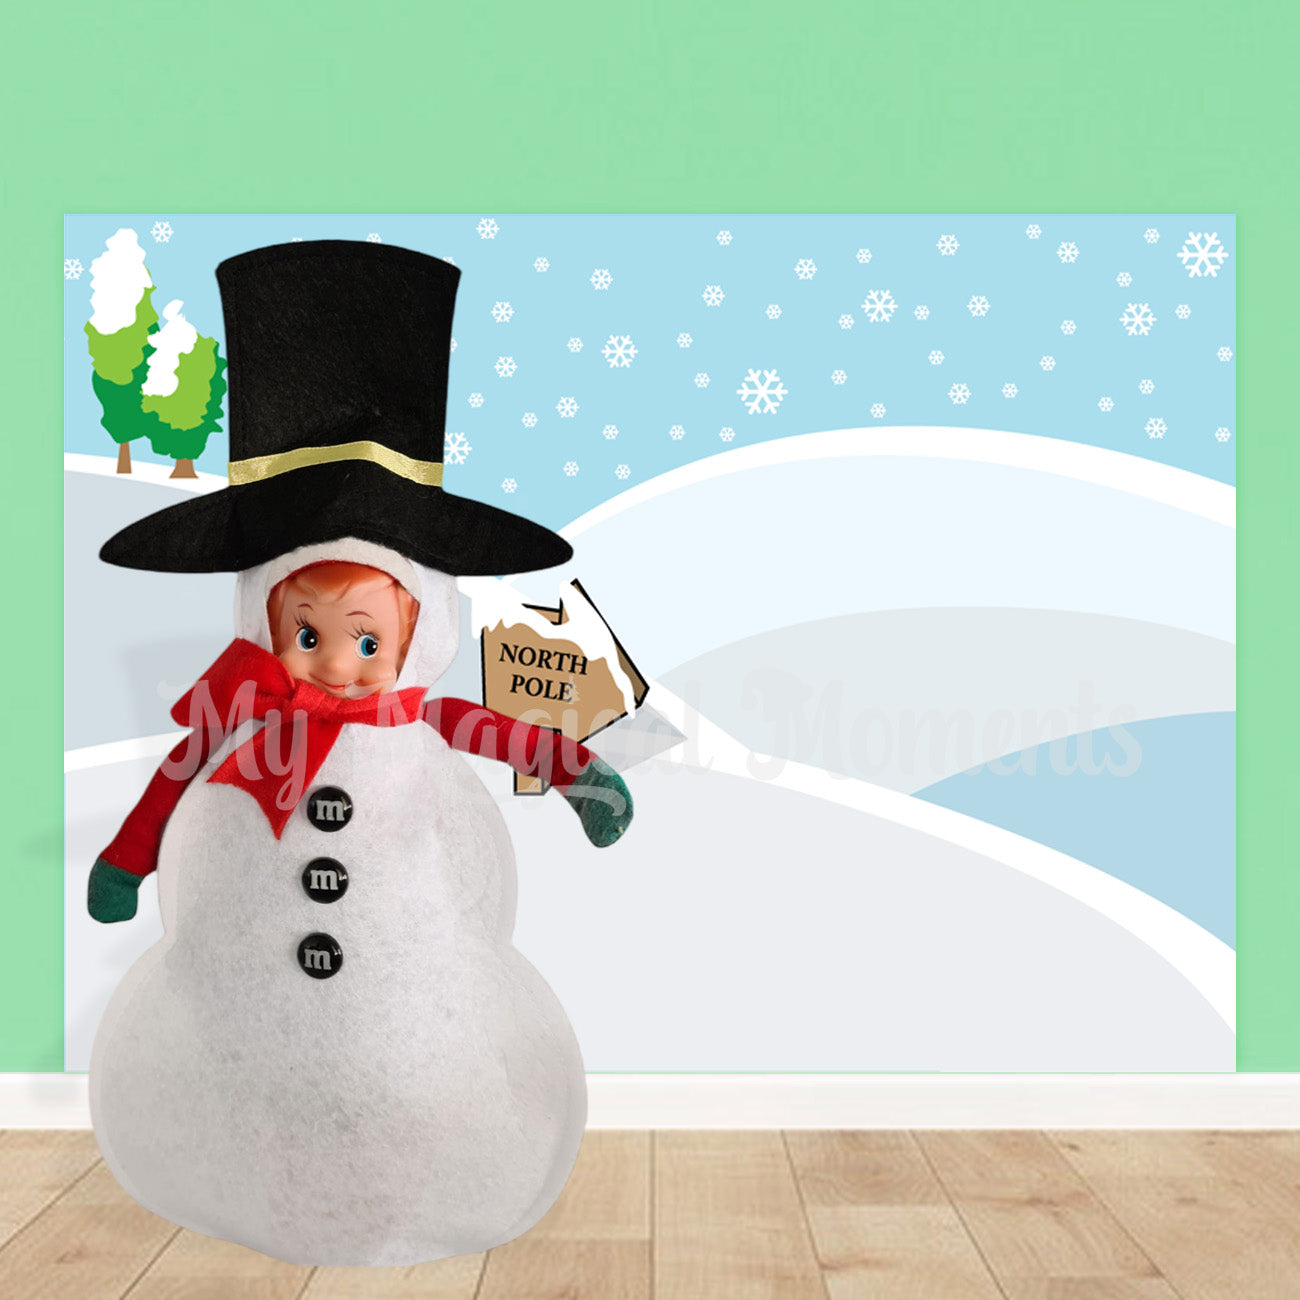 Elf wearing a snowman costume